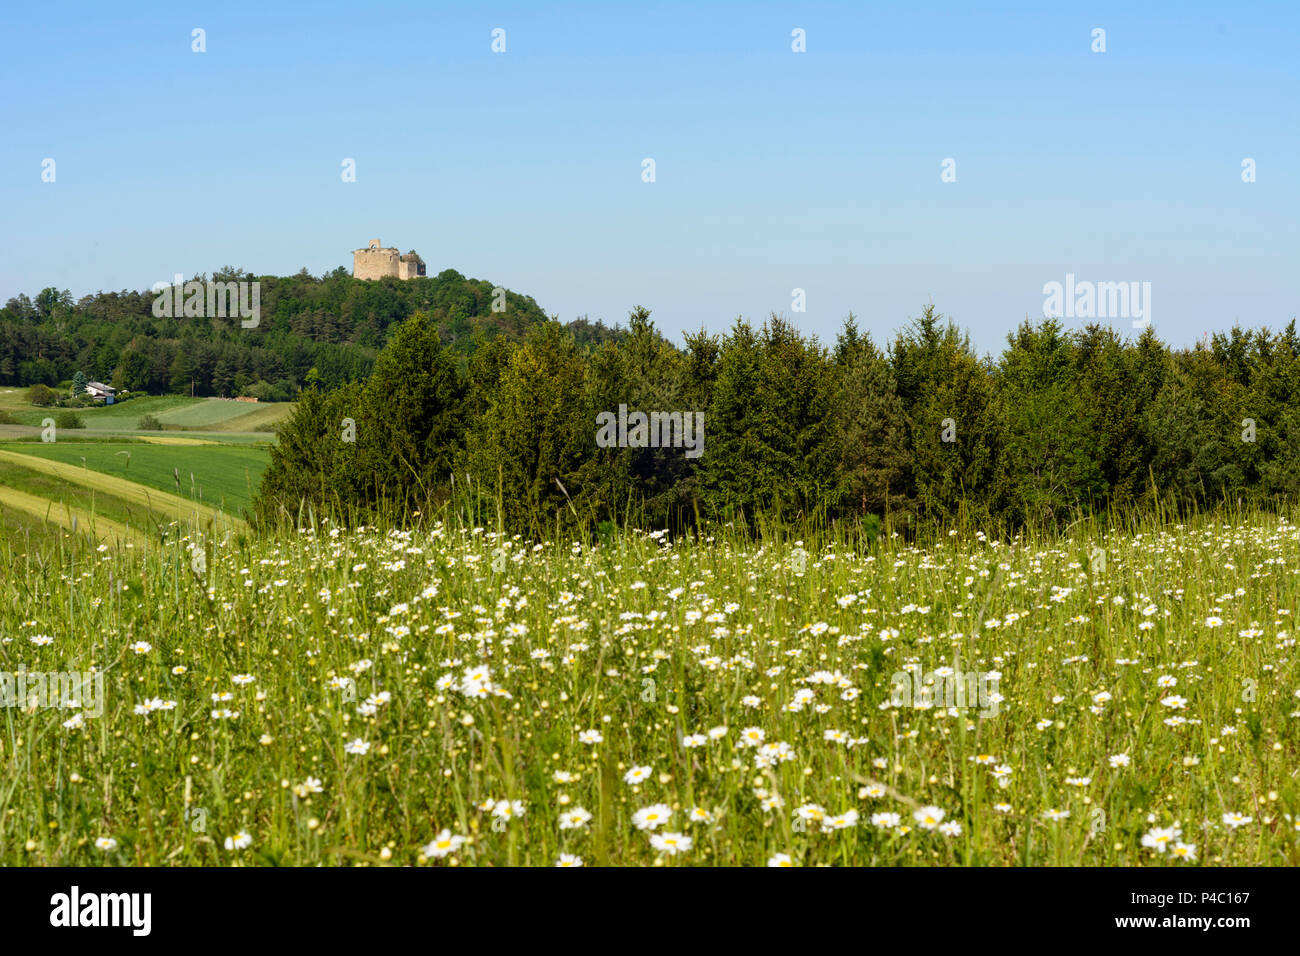 Markt Sankt Martin, castle ruin Landsee, Naturpark Landseer Berge (natural preserve Landsee mountains), meadow, Mittelburgenland, Burgenland, Austria Stock Photo